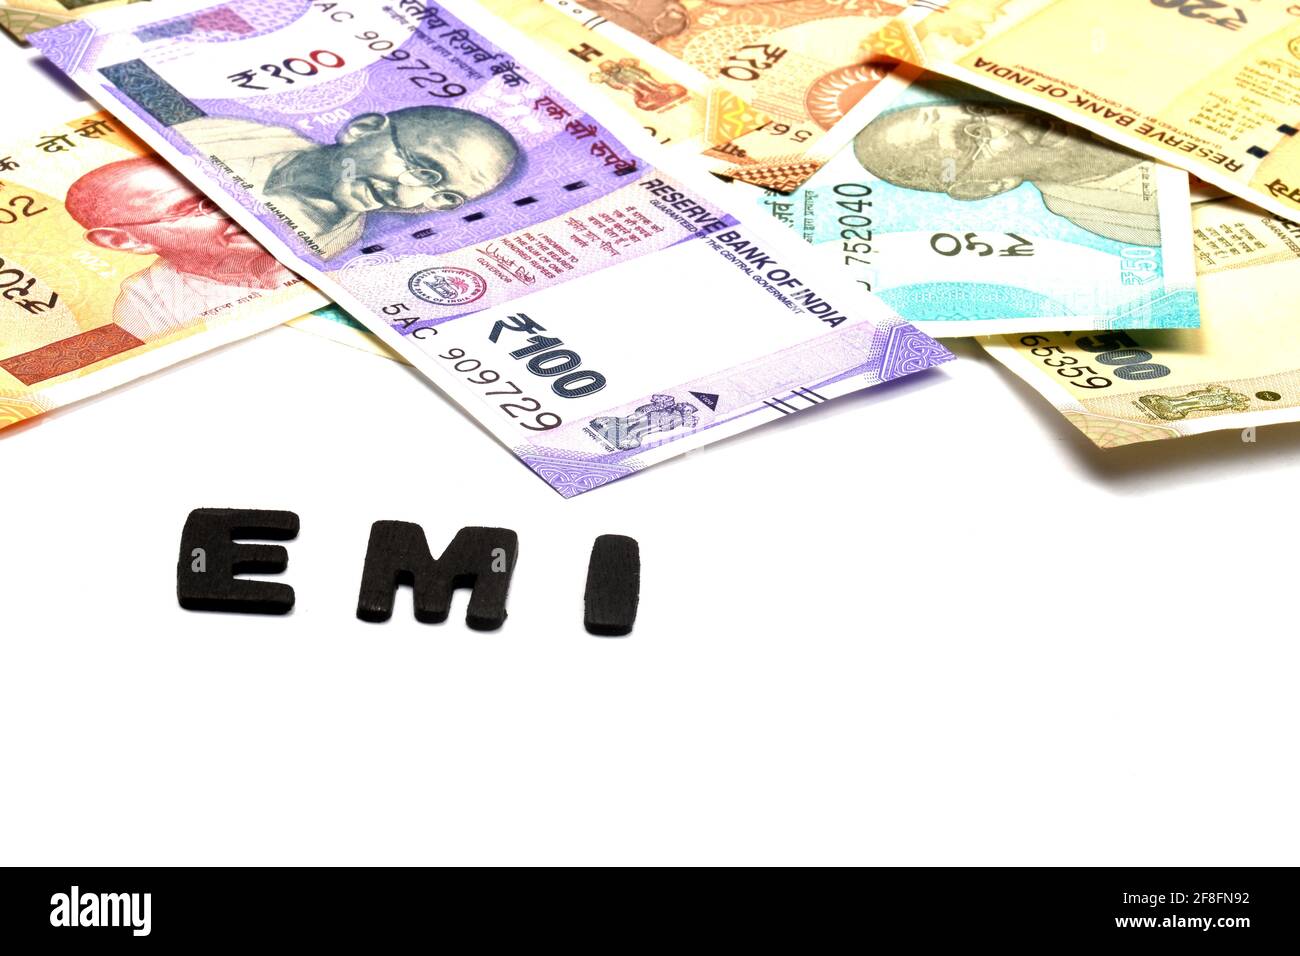 EMI concept, EMI alphabet on money background, Indian Currency, Rupee, Indian Rupee, Indian Money, Business, finance, investment, Stock Photo